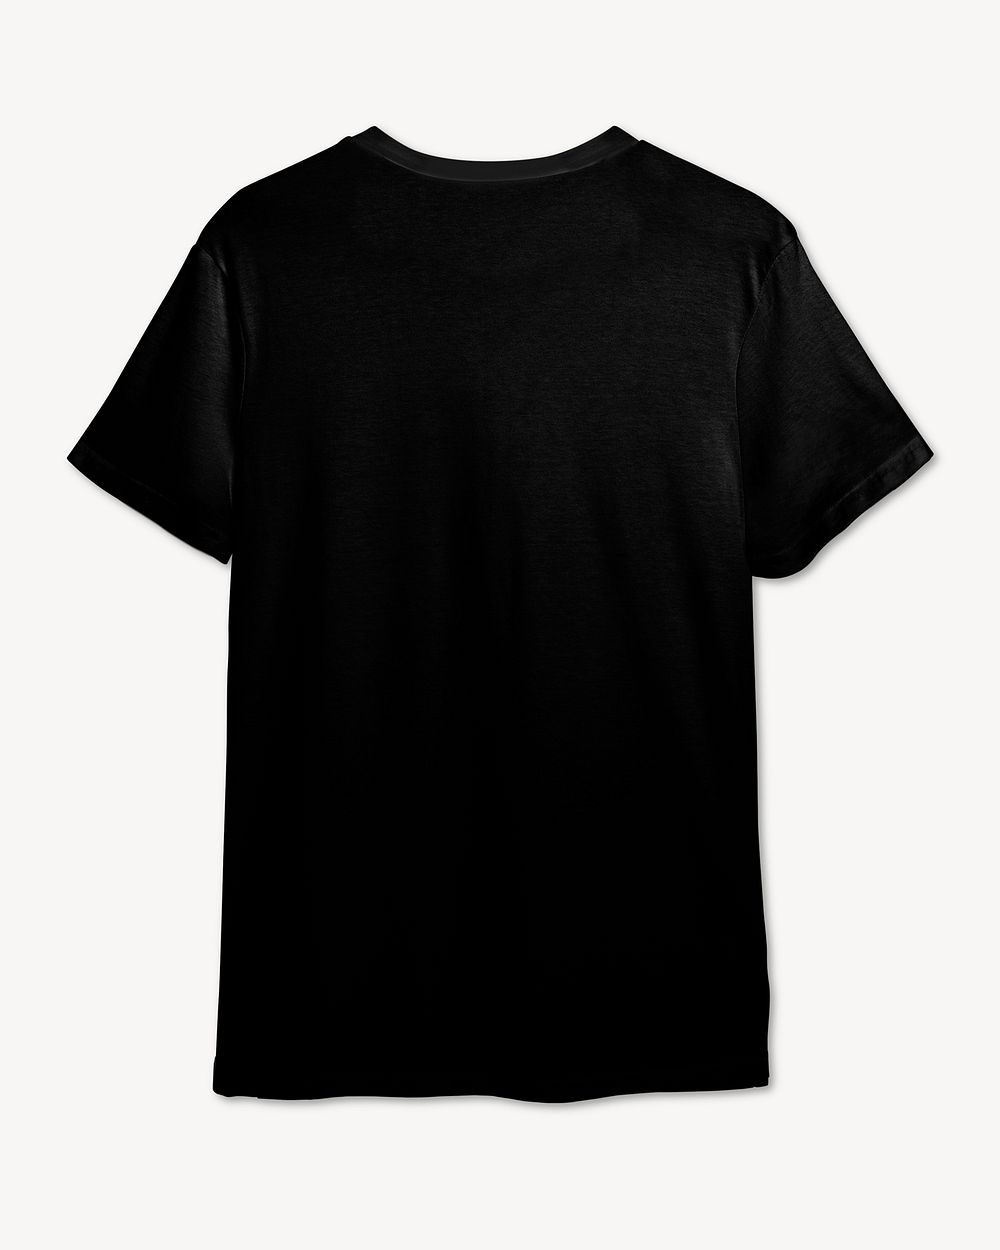 Mockup Black T Shirt